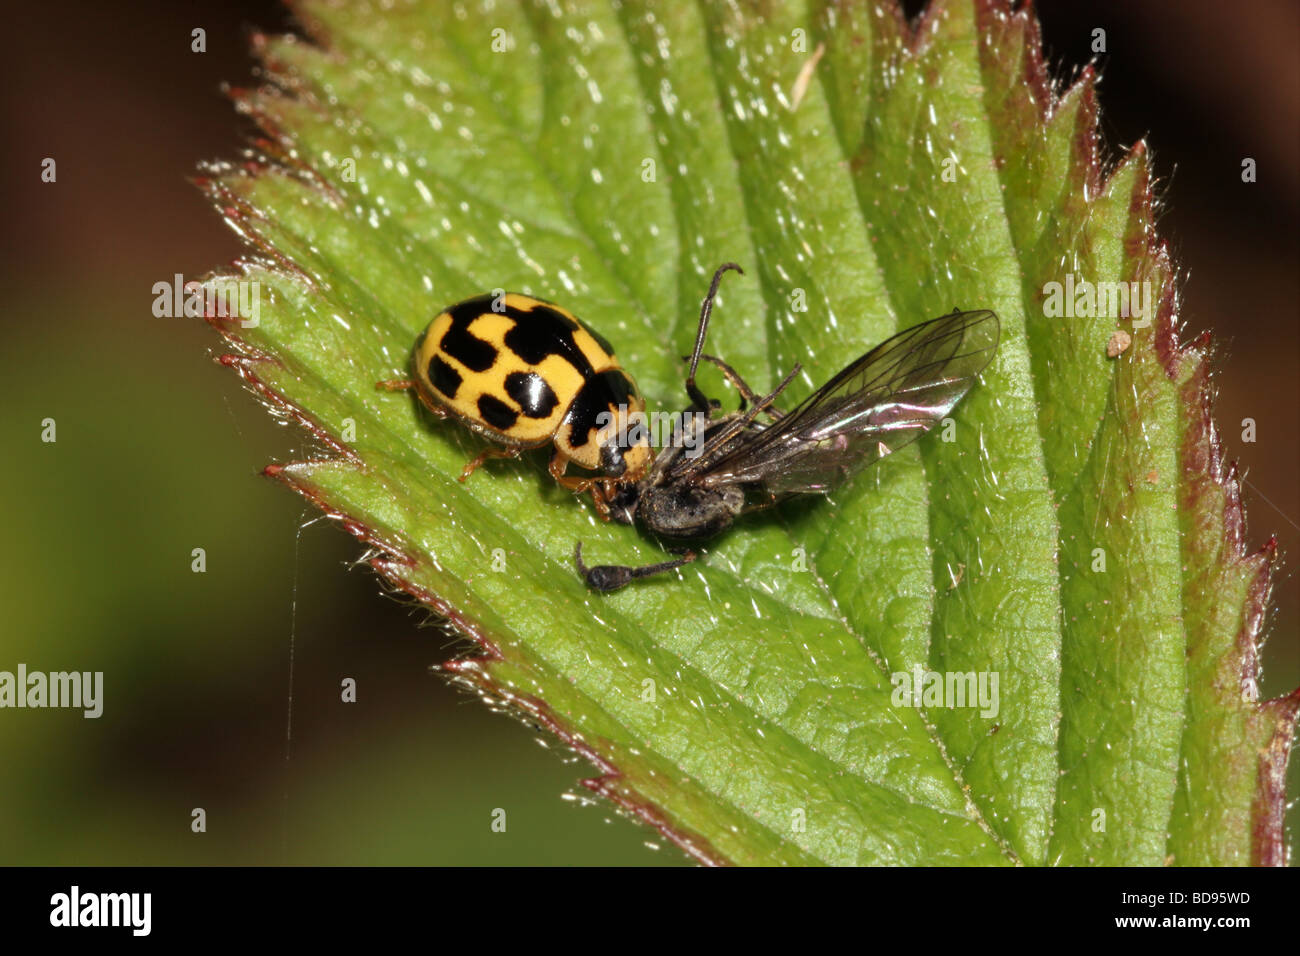 14 spot ladybird Propylea 14 punctata Coccinellidae feeding on a fly UK Stock Photo